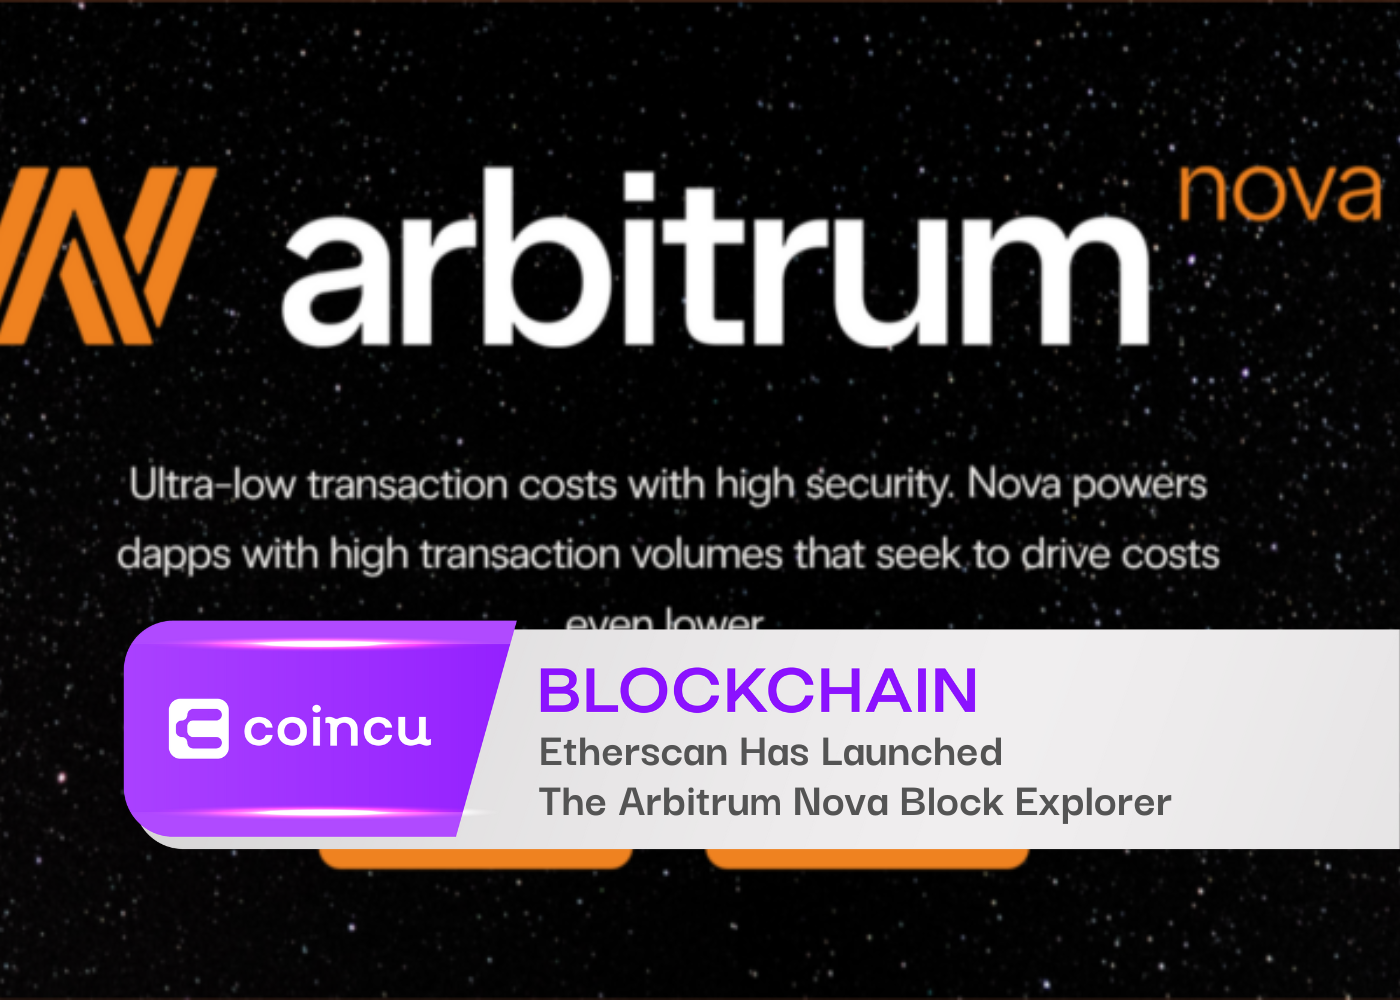 Etherscan Has Launched The Arbitrum Nova Block Explorer